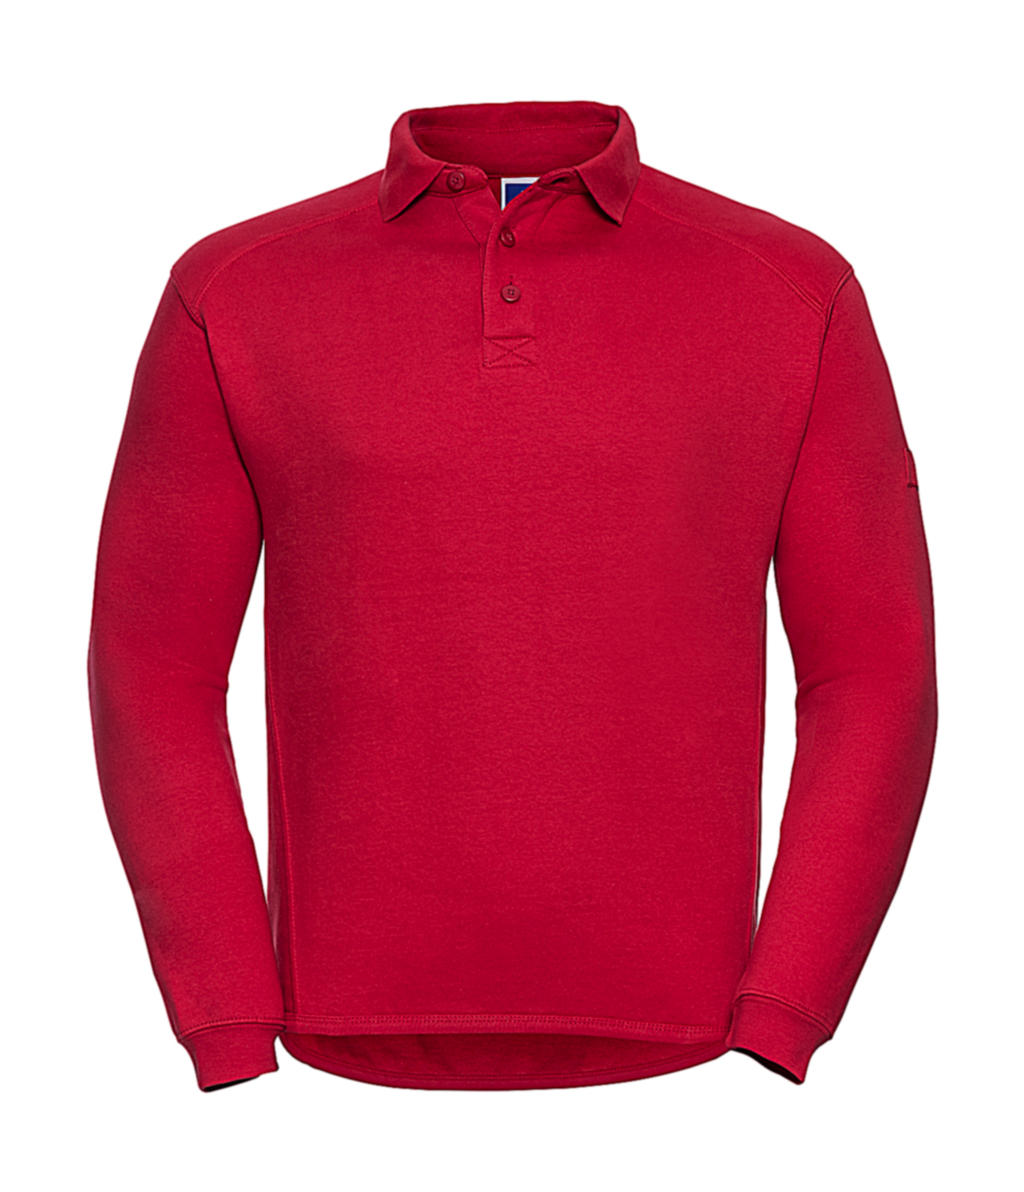  Heavy Duty Collar Sweatshirt in Farbe Classic Red